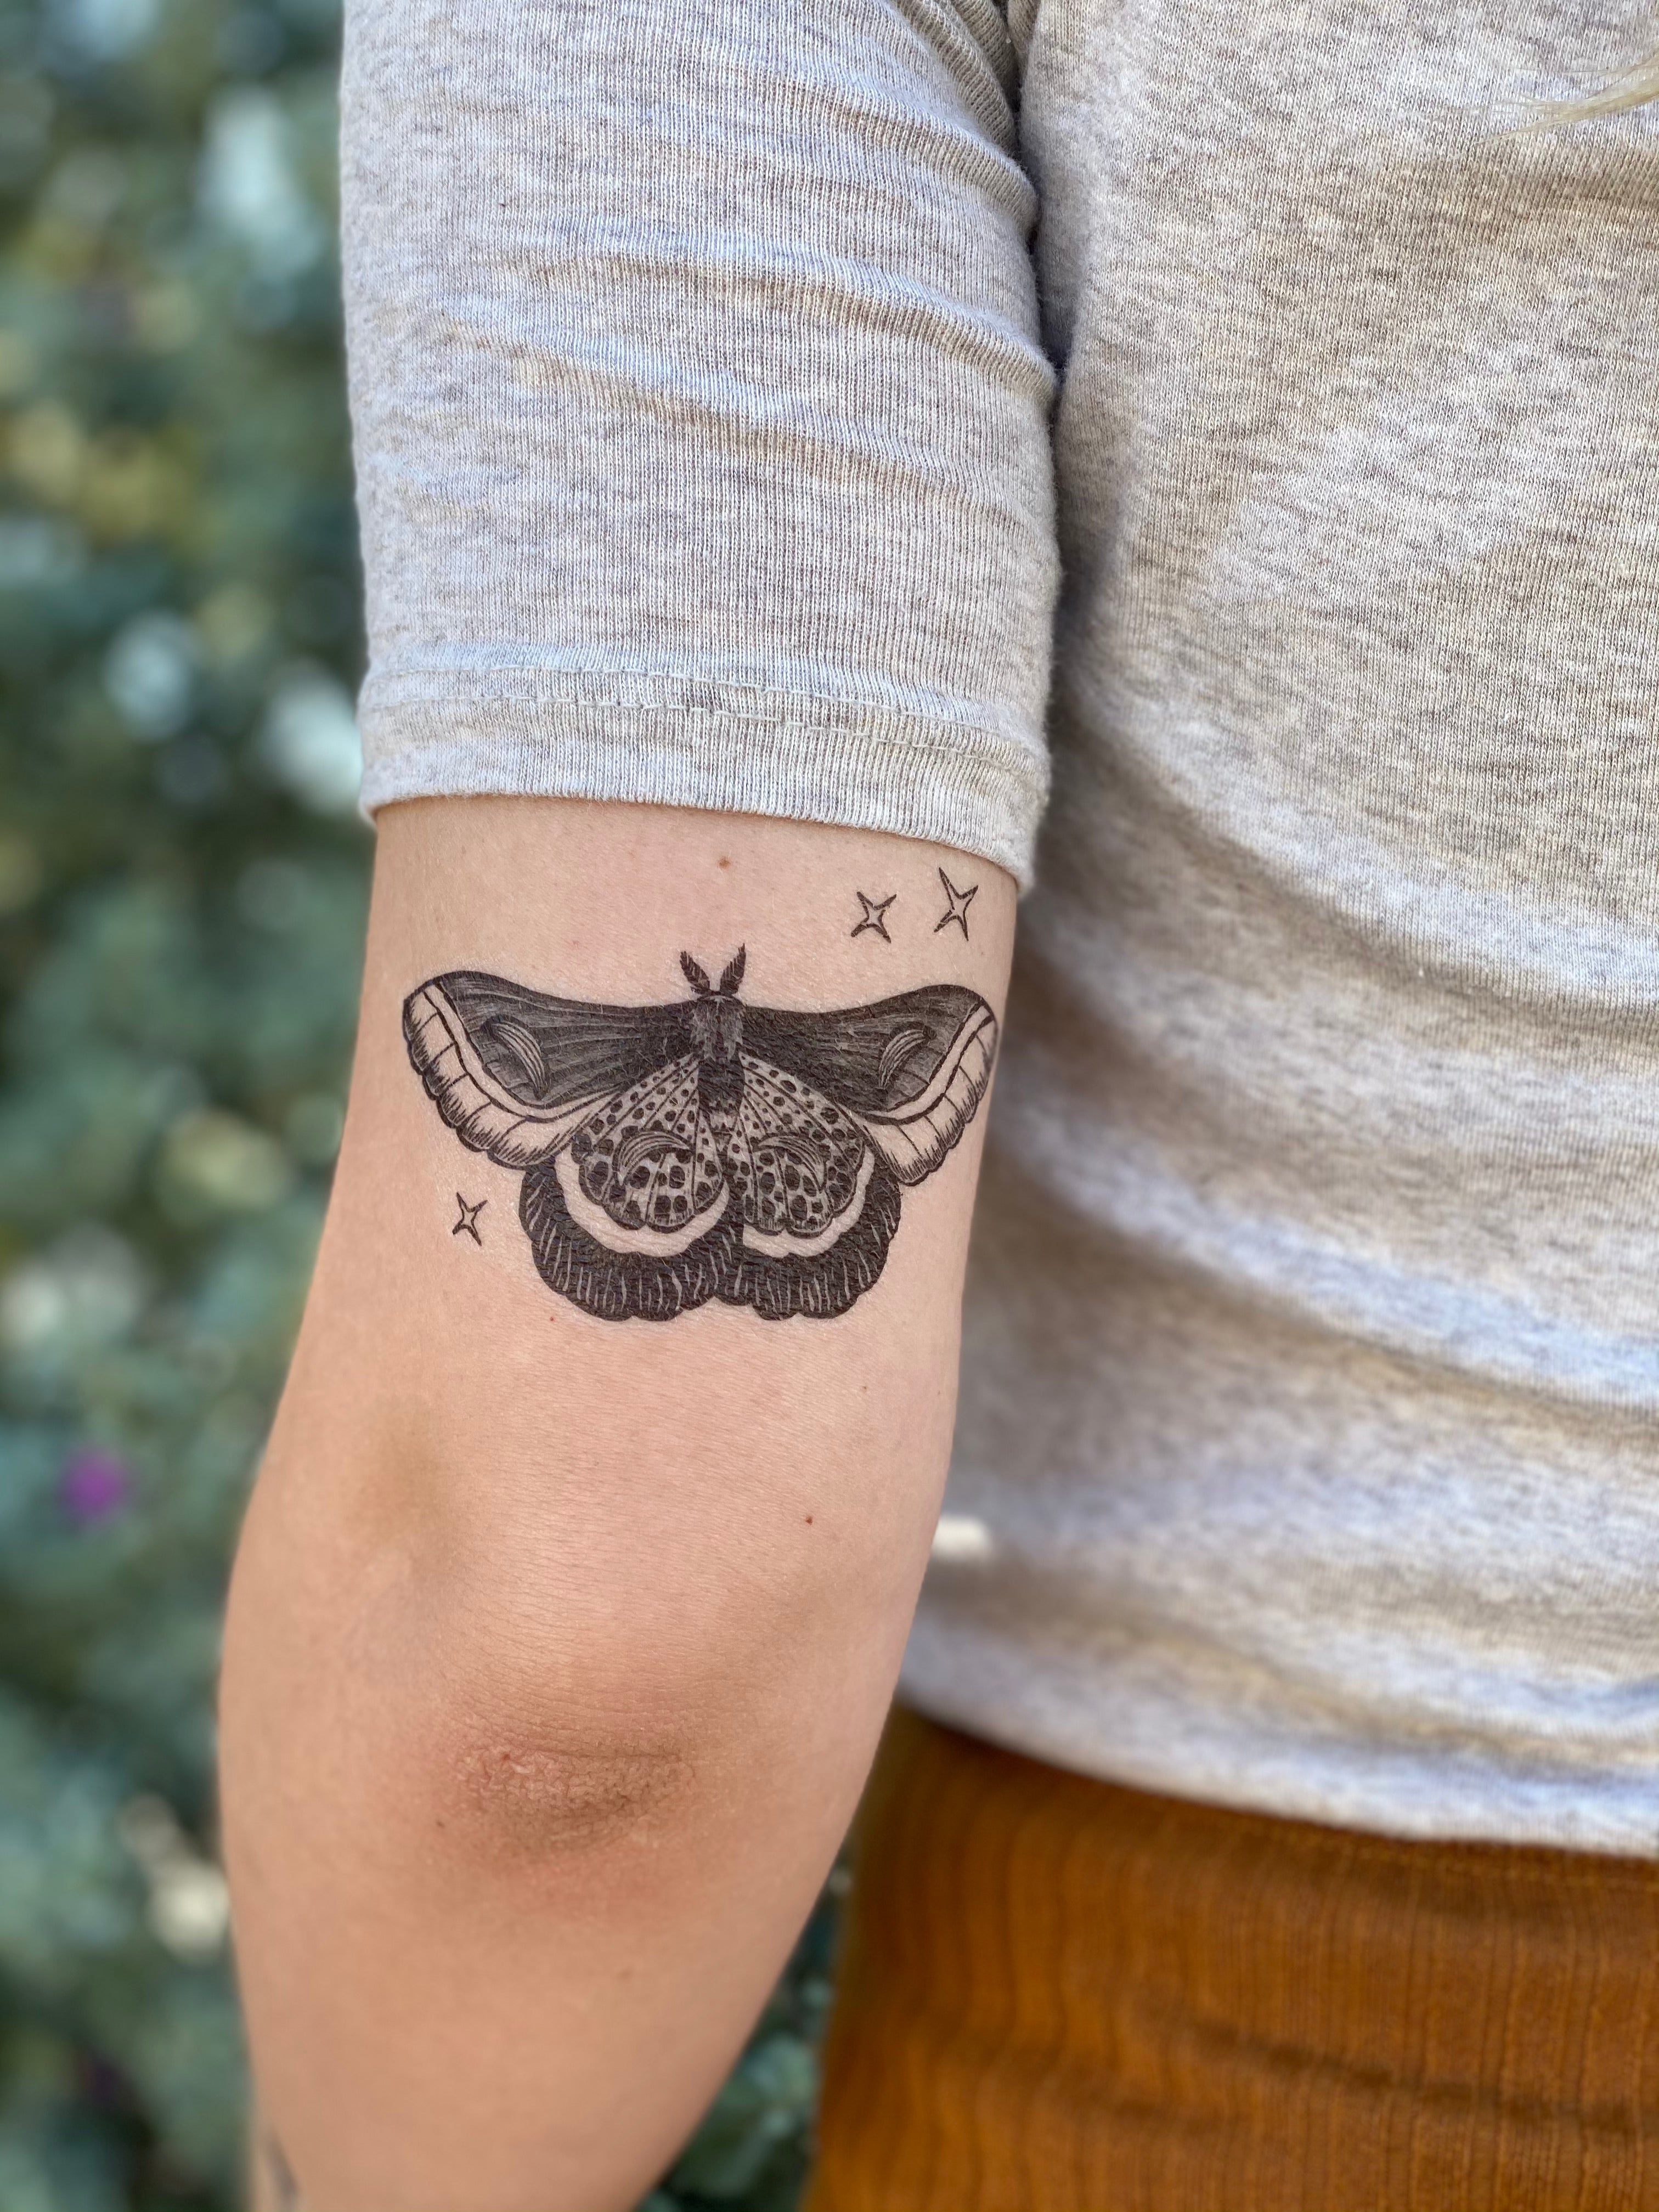 Cool Moths on Arm Tattoo Idea